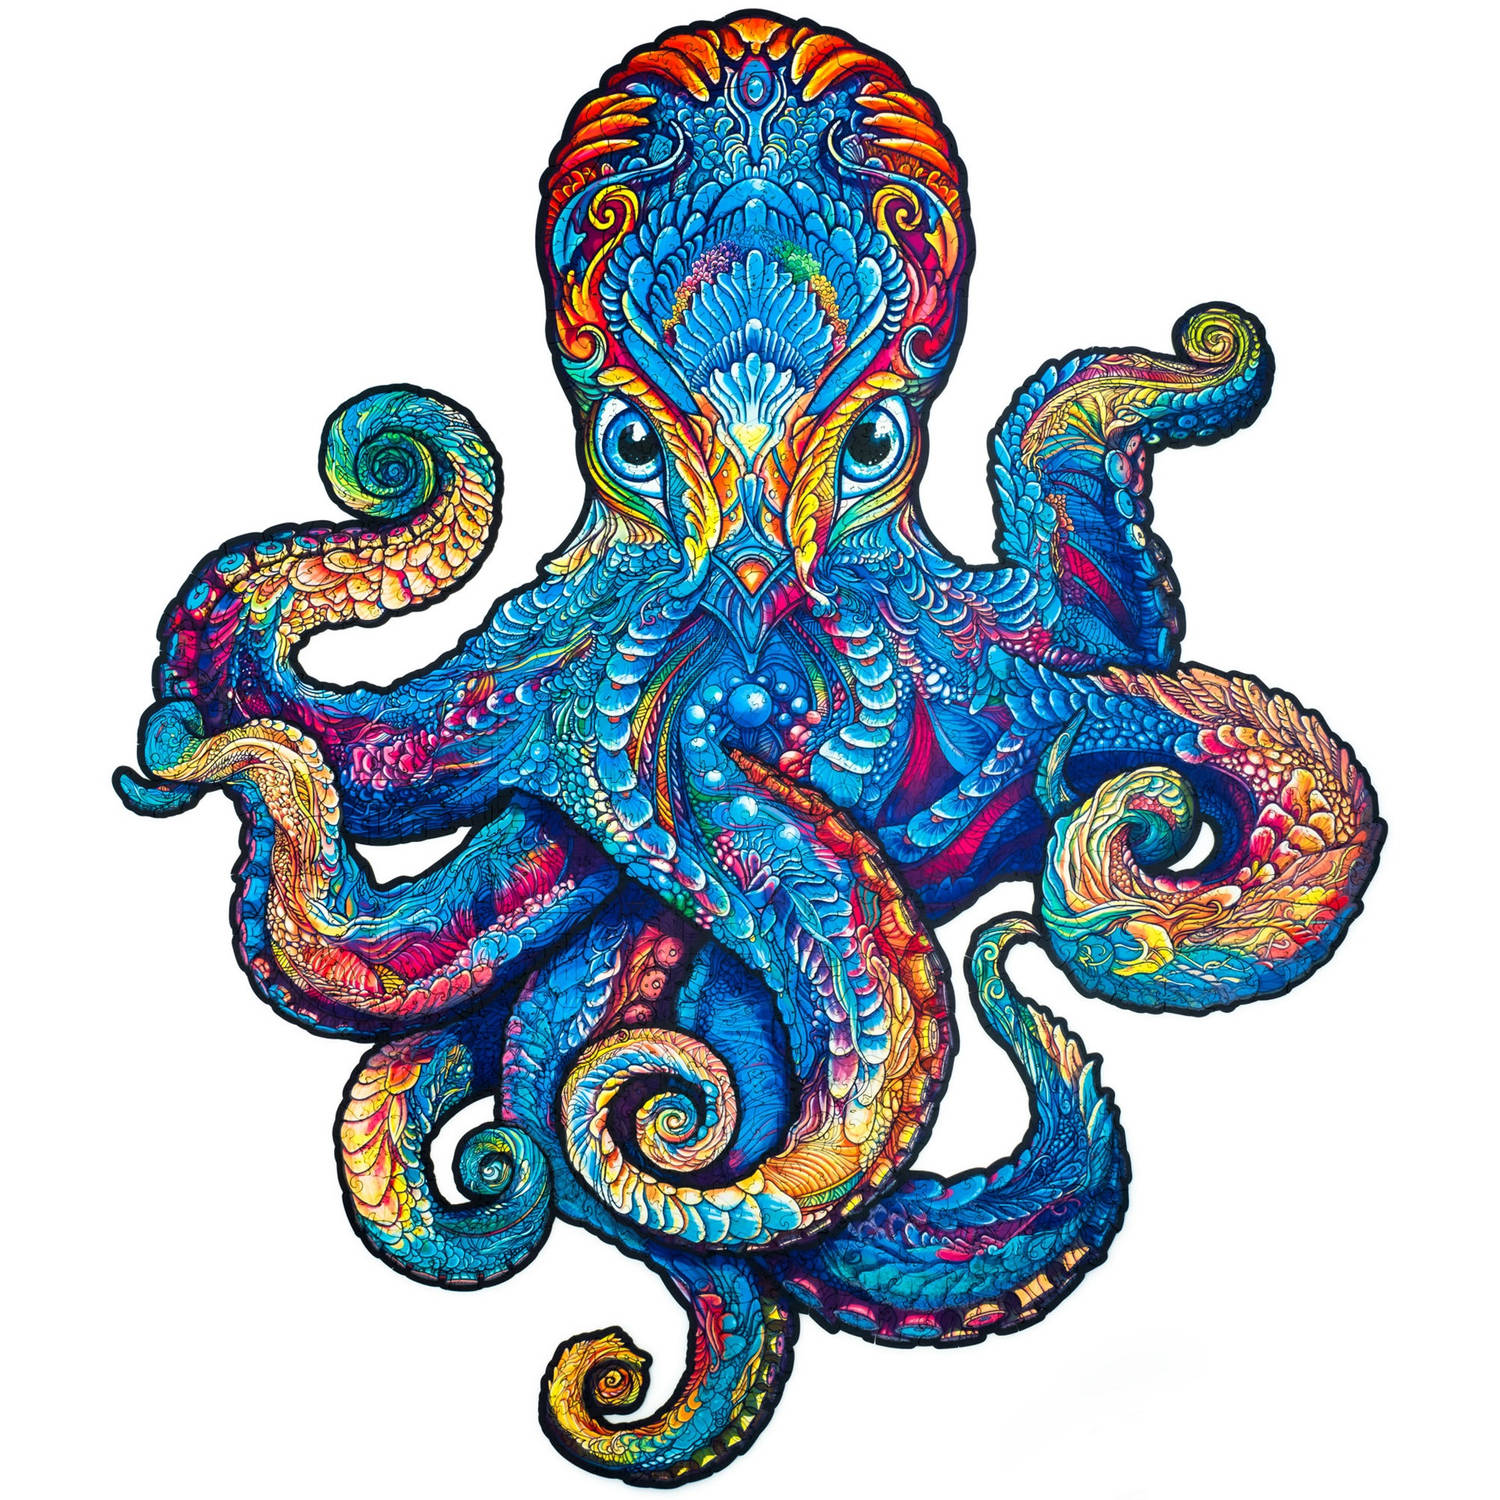 UNIDRAGON Houten Puzzel Dier - Magnetische Octopus - 700 stukjes - Royal Size 62x54 cm